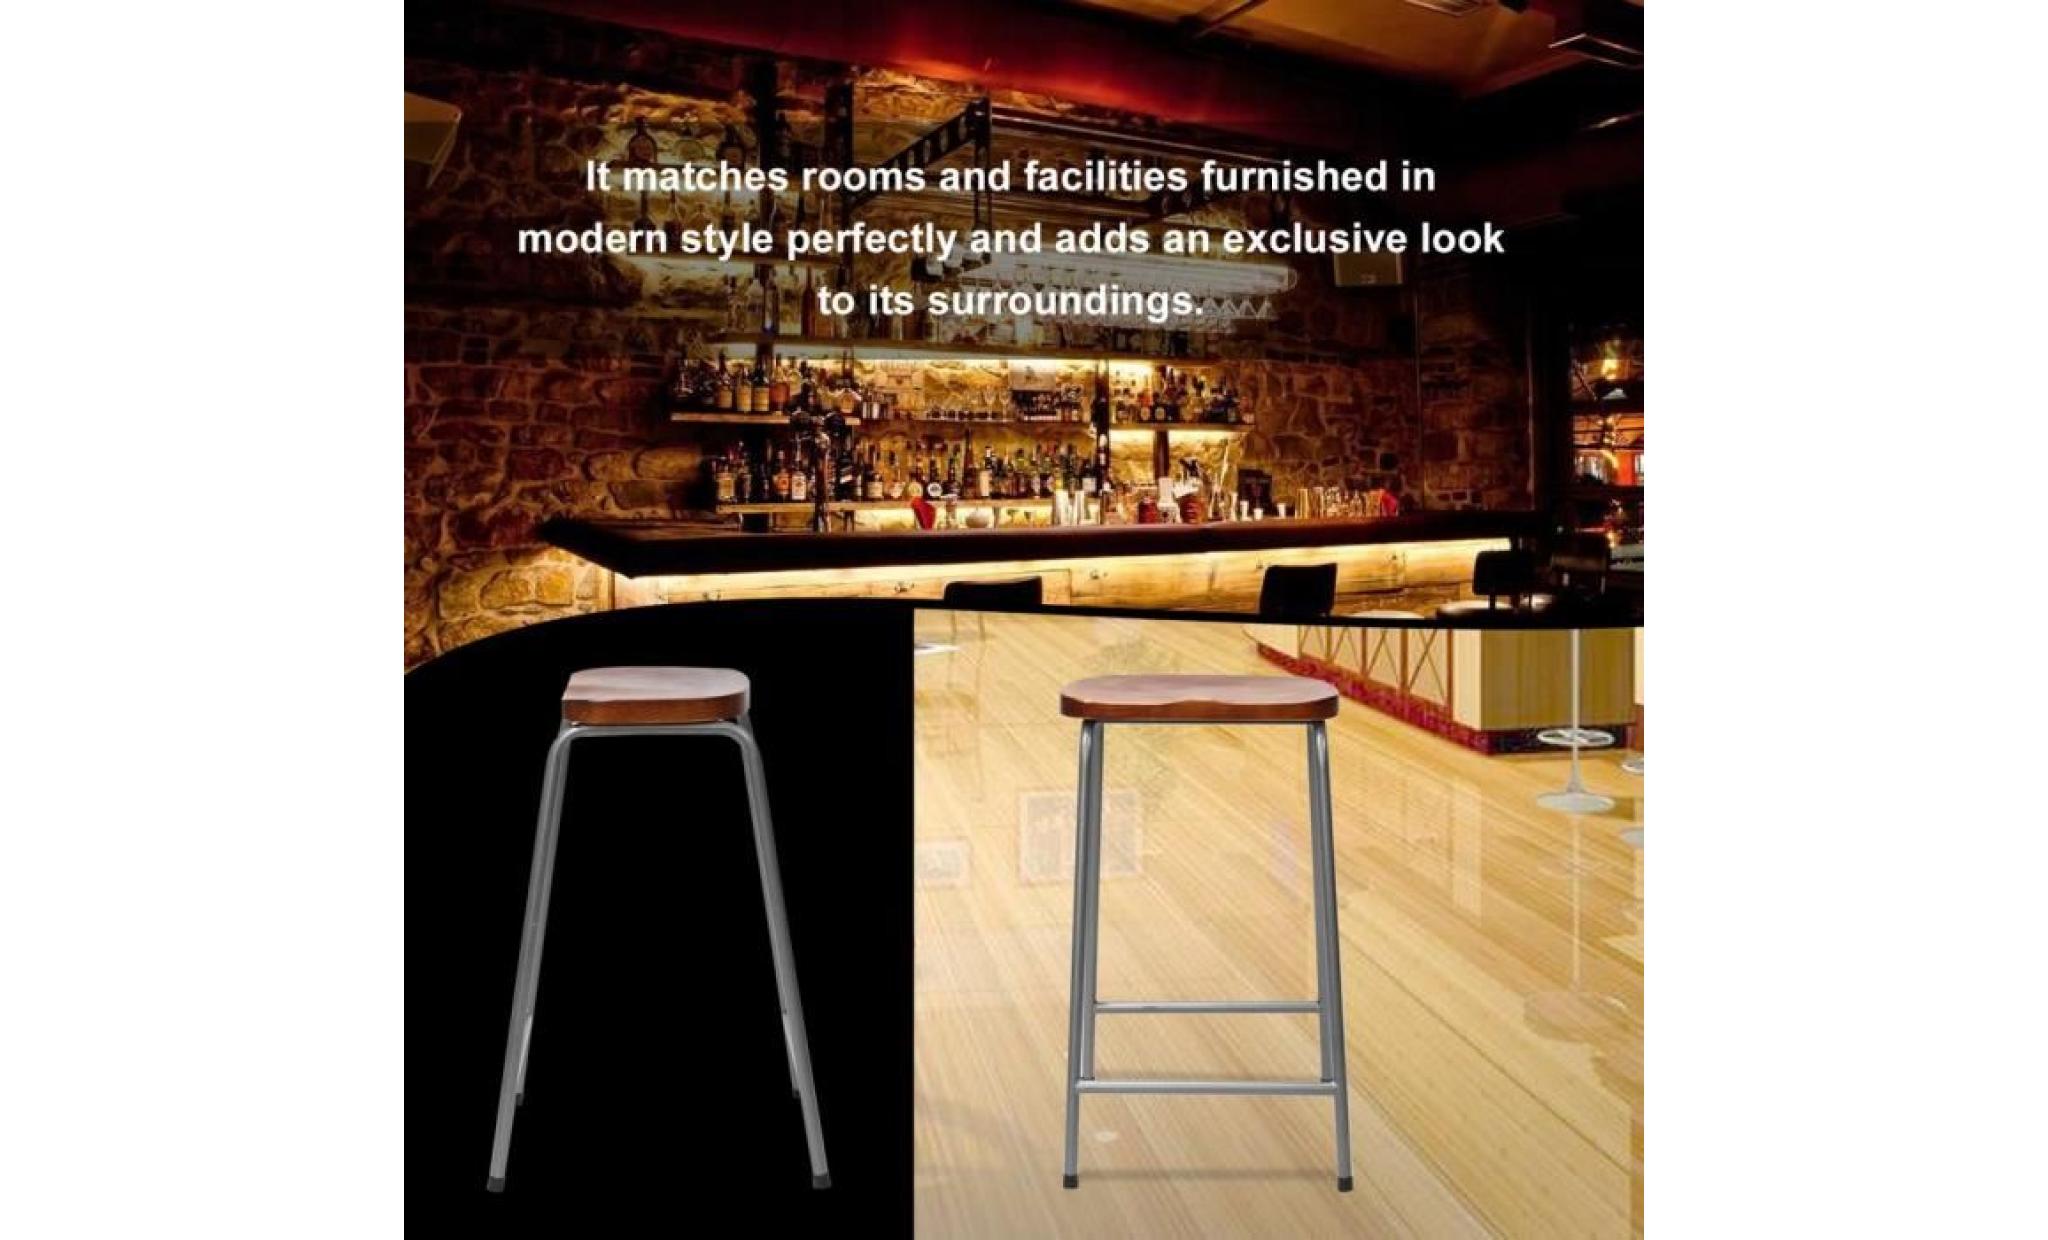 steel tubular frame bar stool classic backless barstool wooden dining chair pas cher